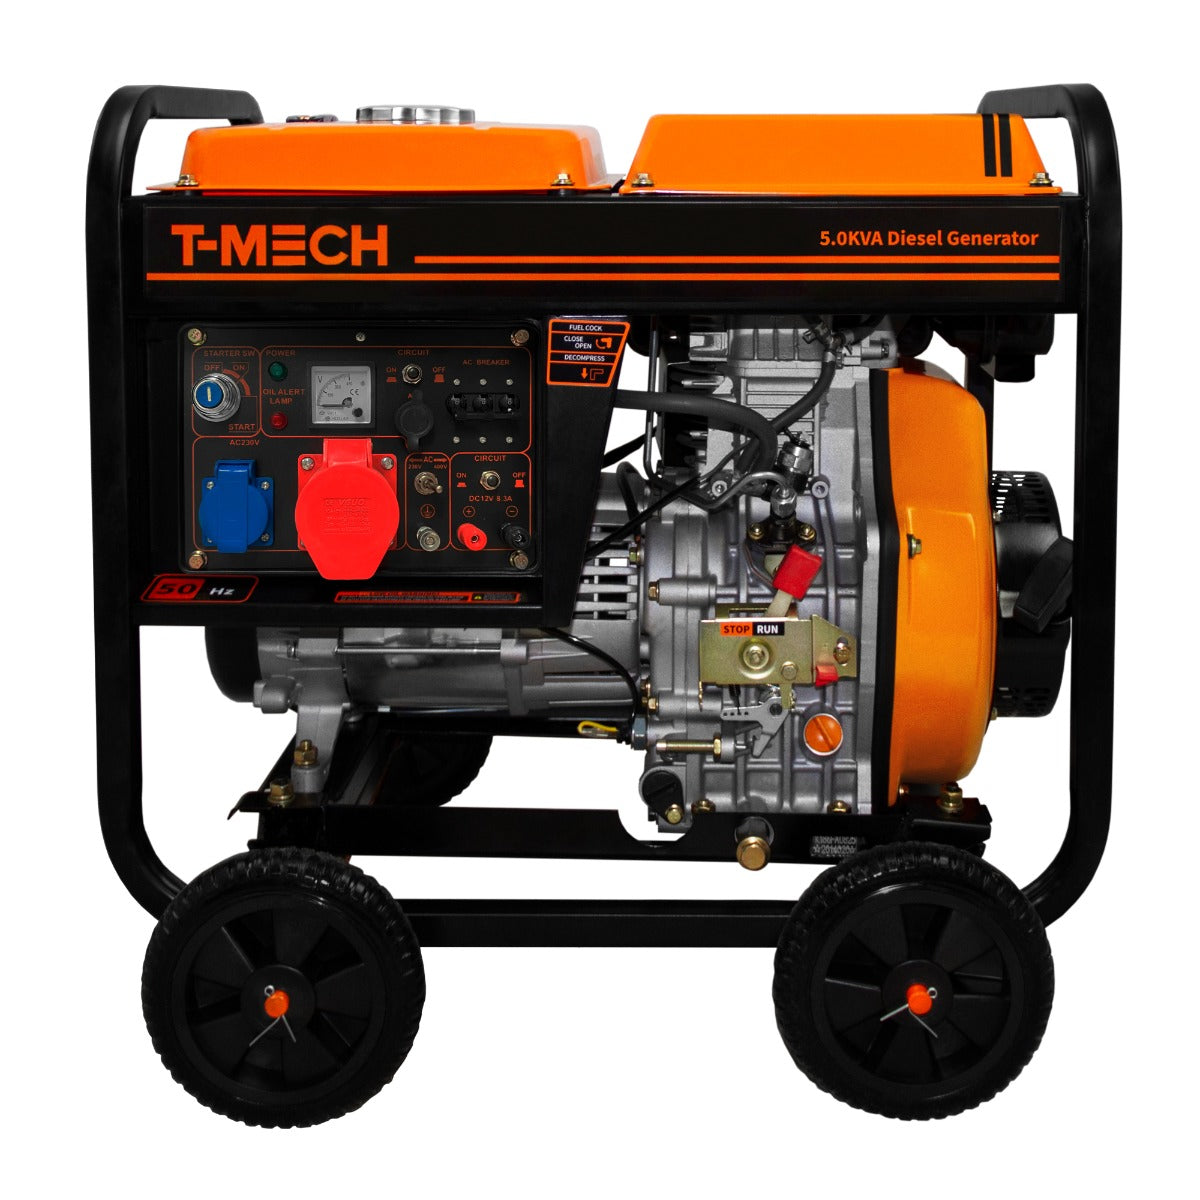 T-Mech 5kVA Portable Diesel Generator Open Frame